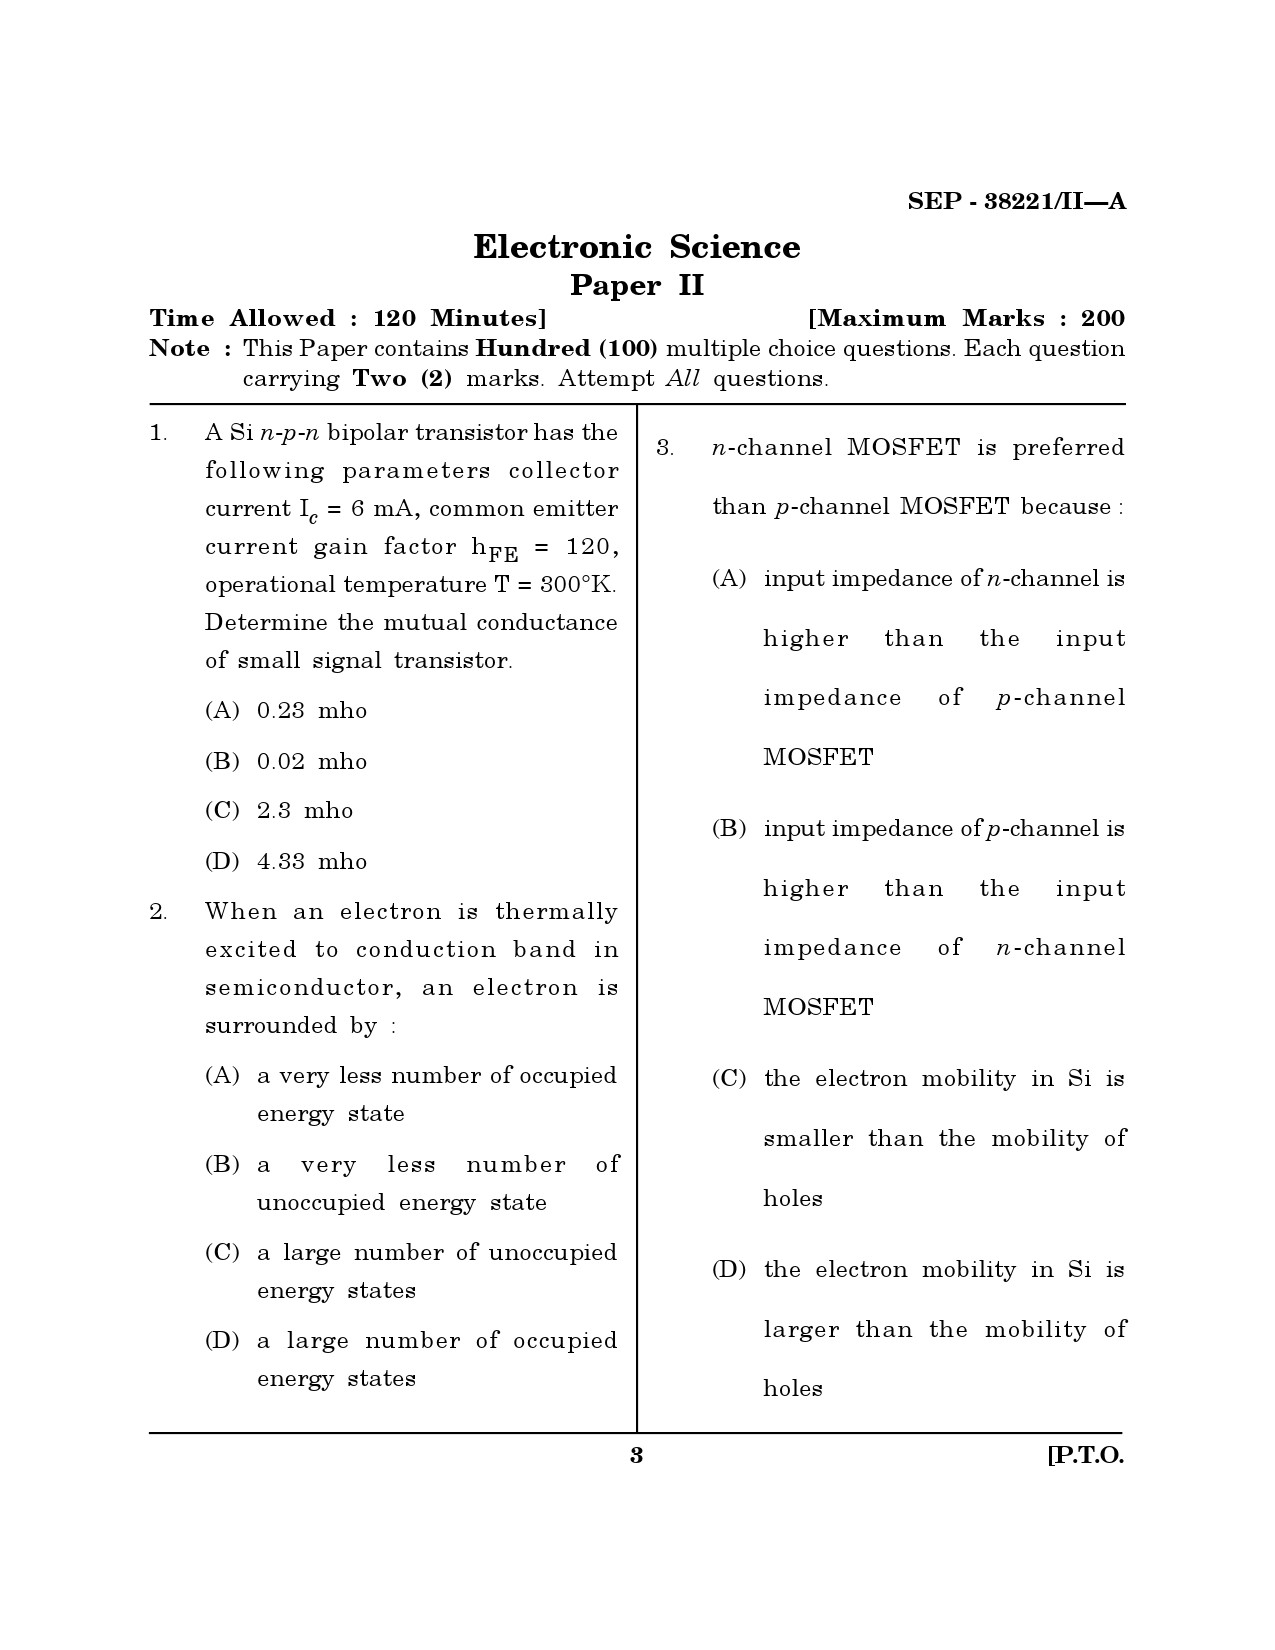 Maharashtra SET Electronics Science Exam Question Paper September 2021 2